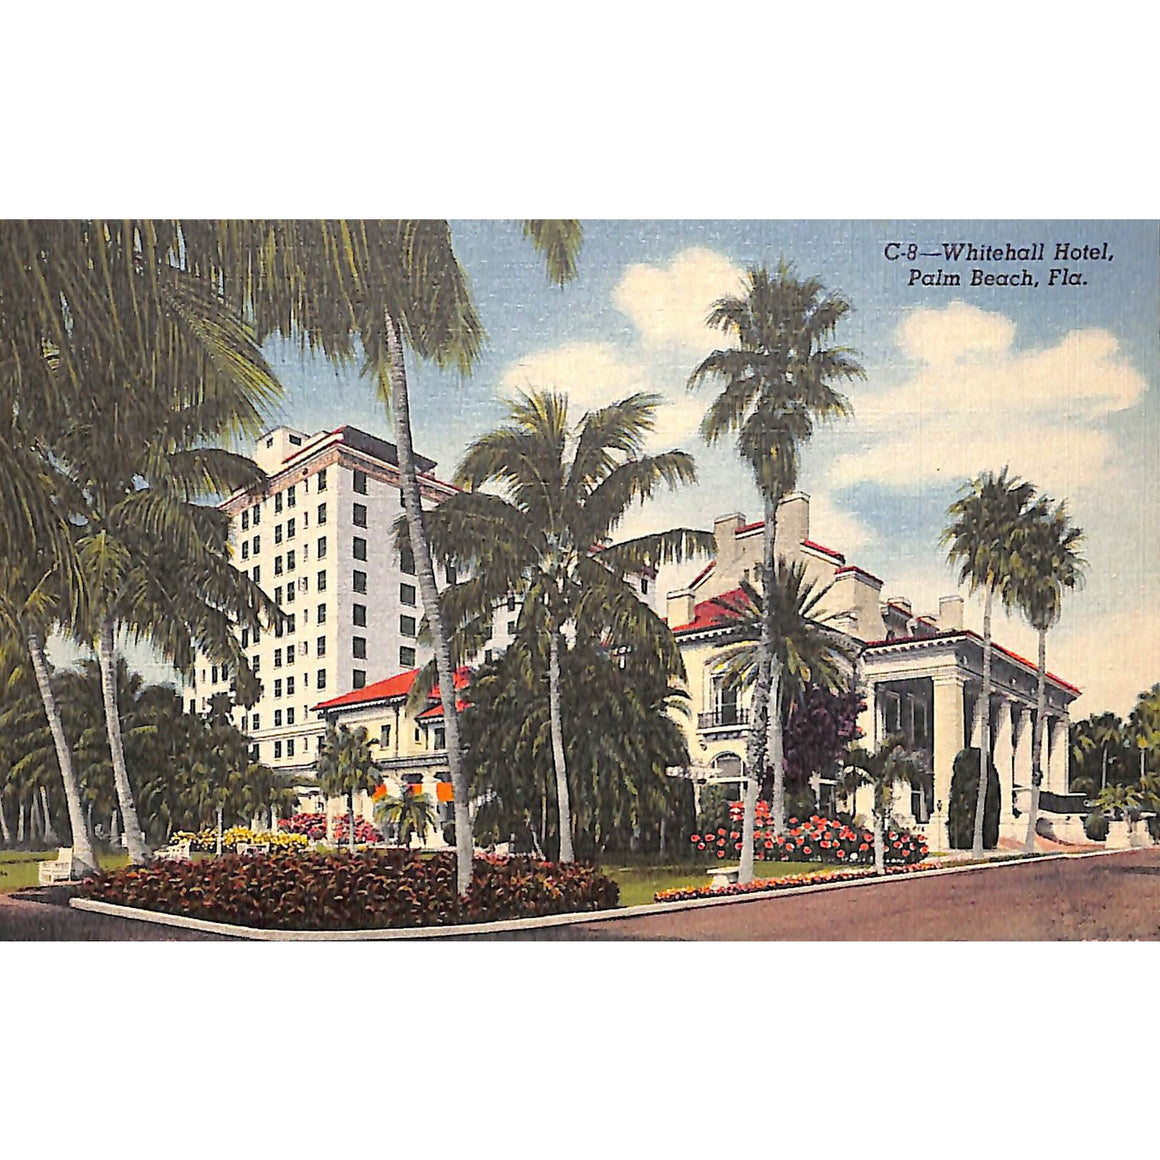 Whitehall Hotel, Palm Beach Postcard